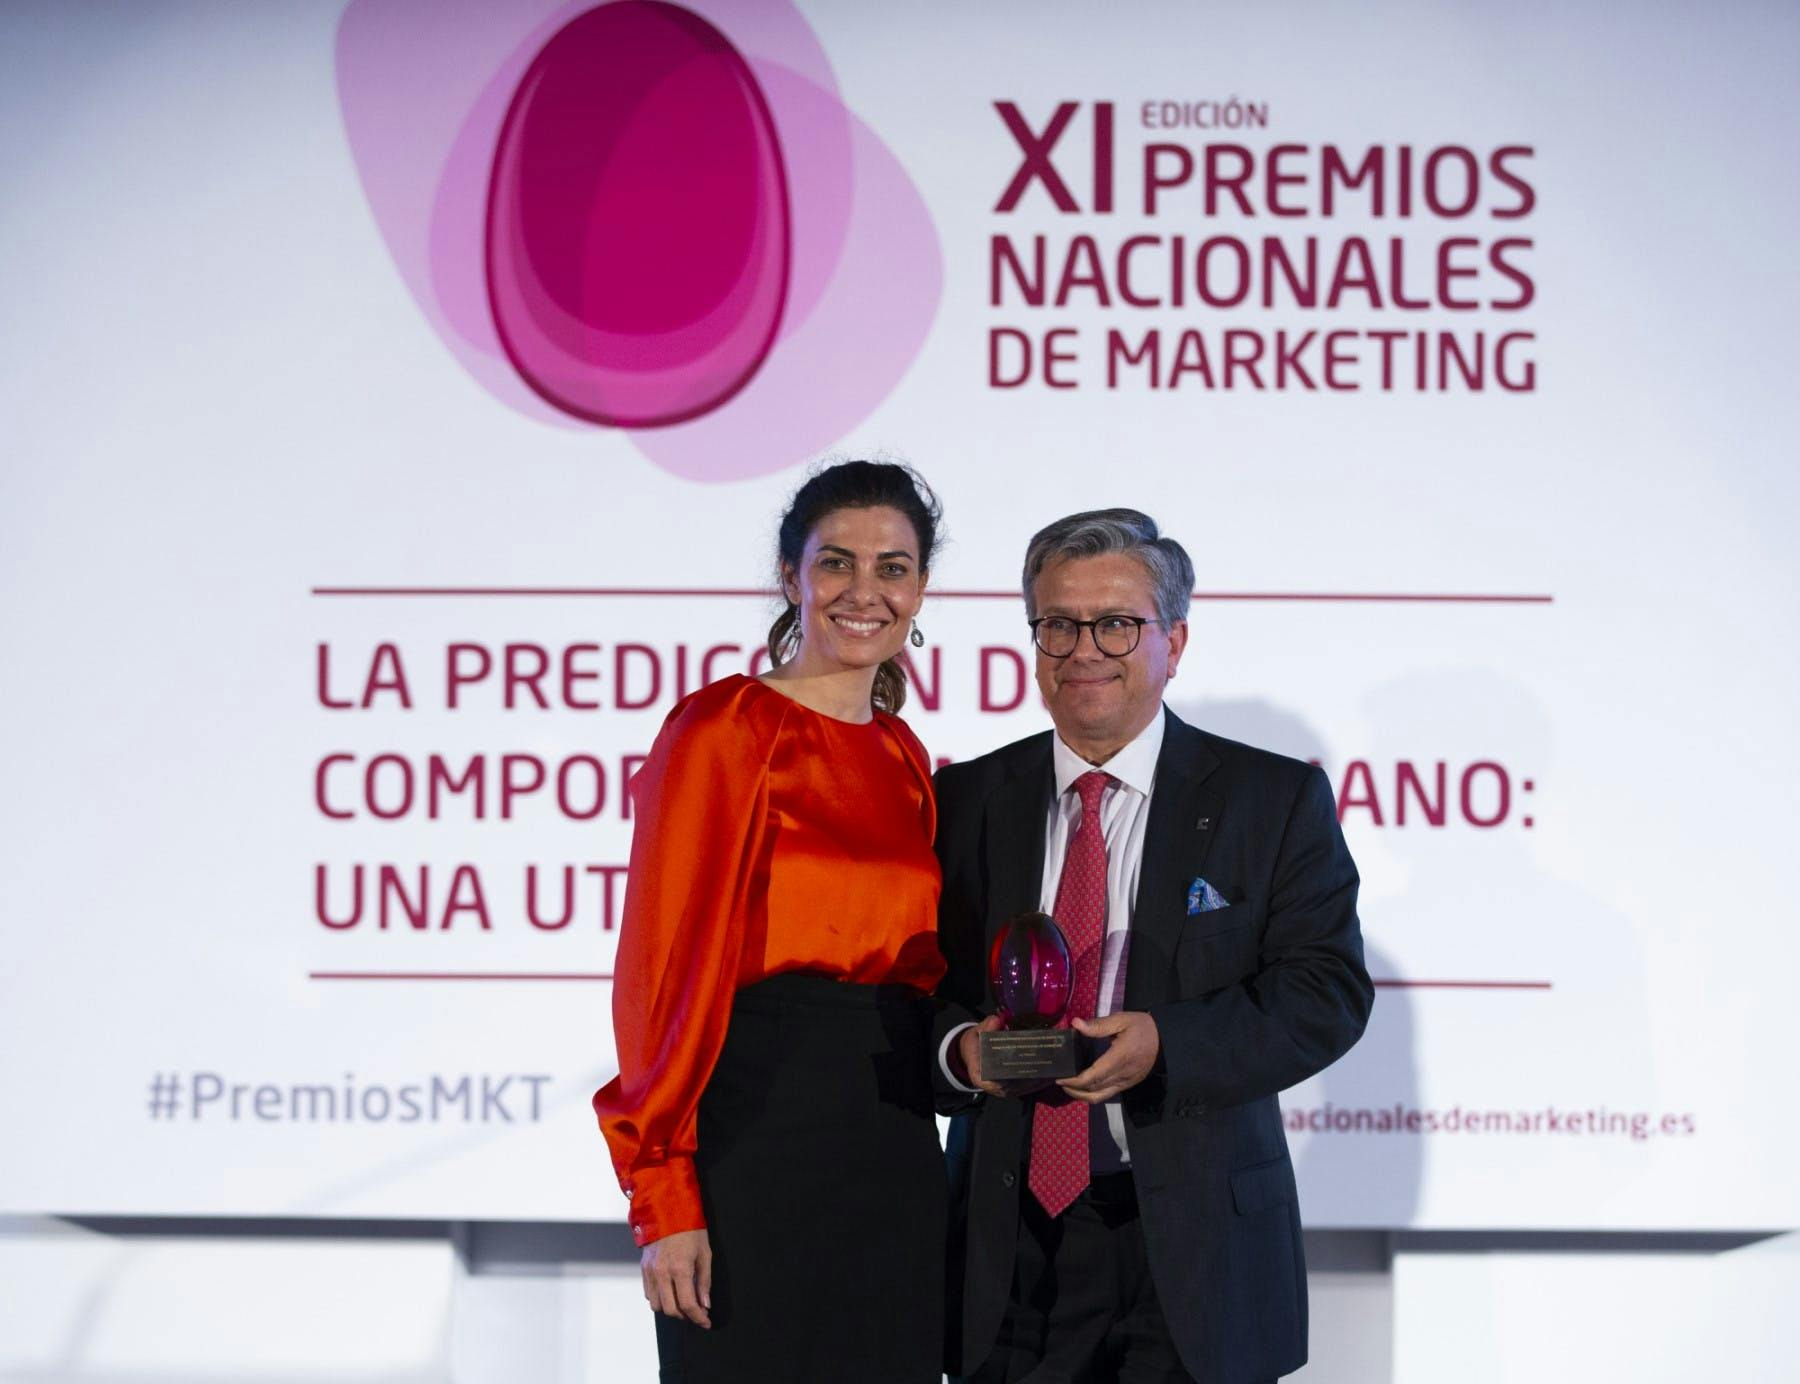 Image 31 of Santiago Alfonso Mejor Profesional de Marketing 2019 1 in Santiago Alfonso, "Best Marketing Professional 2019" - Cosentino